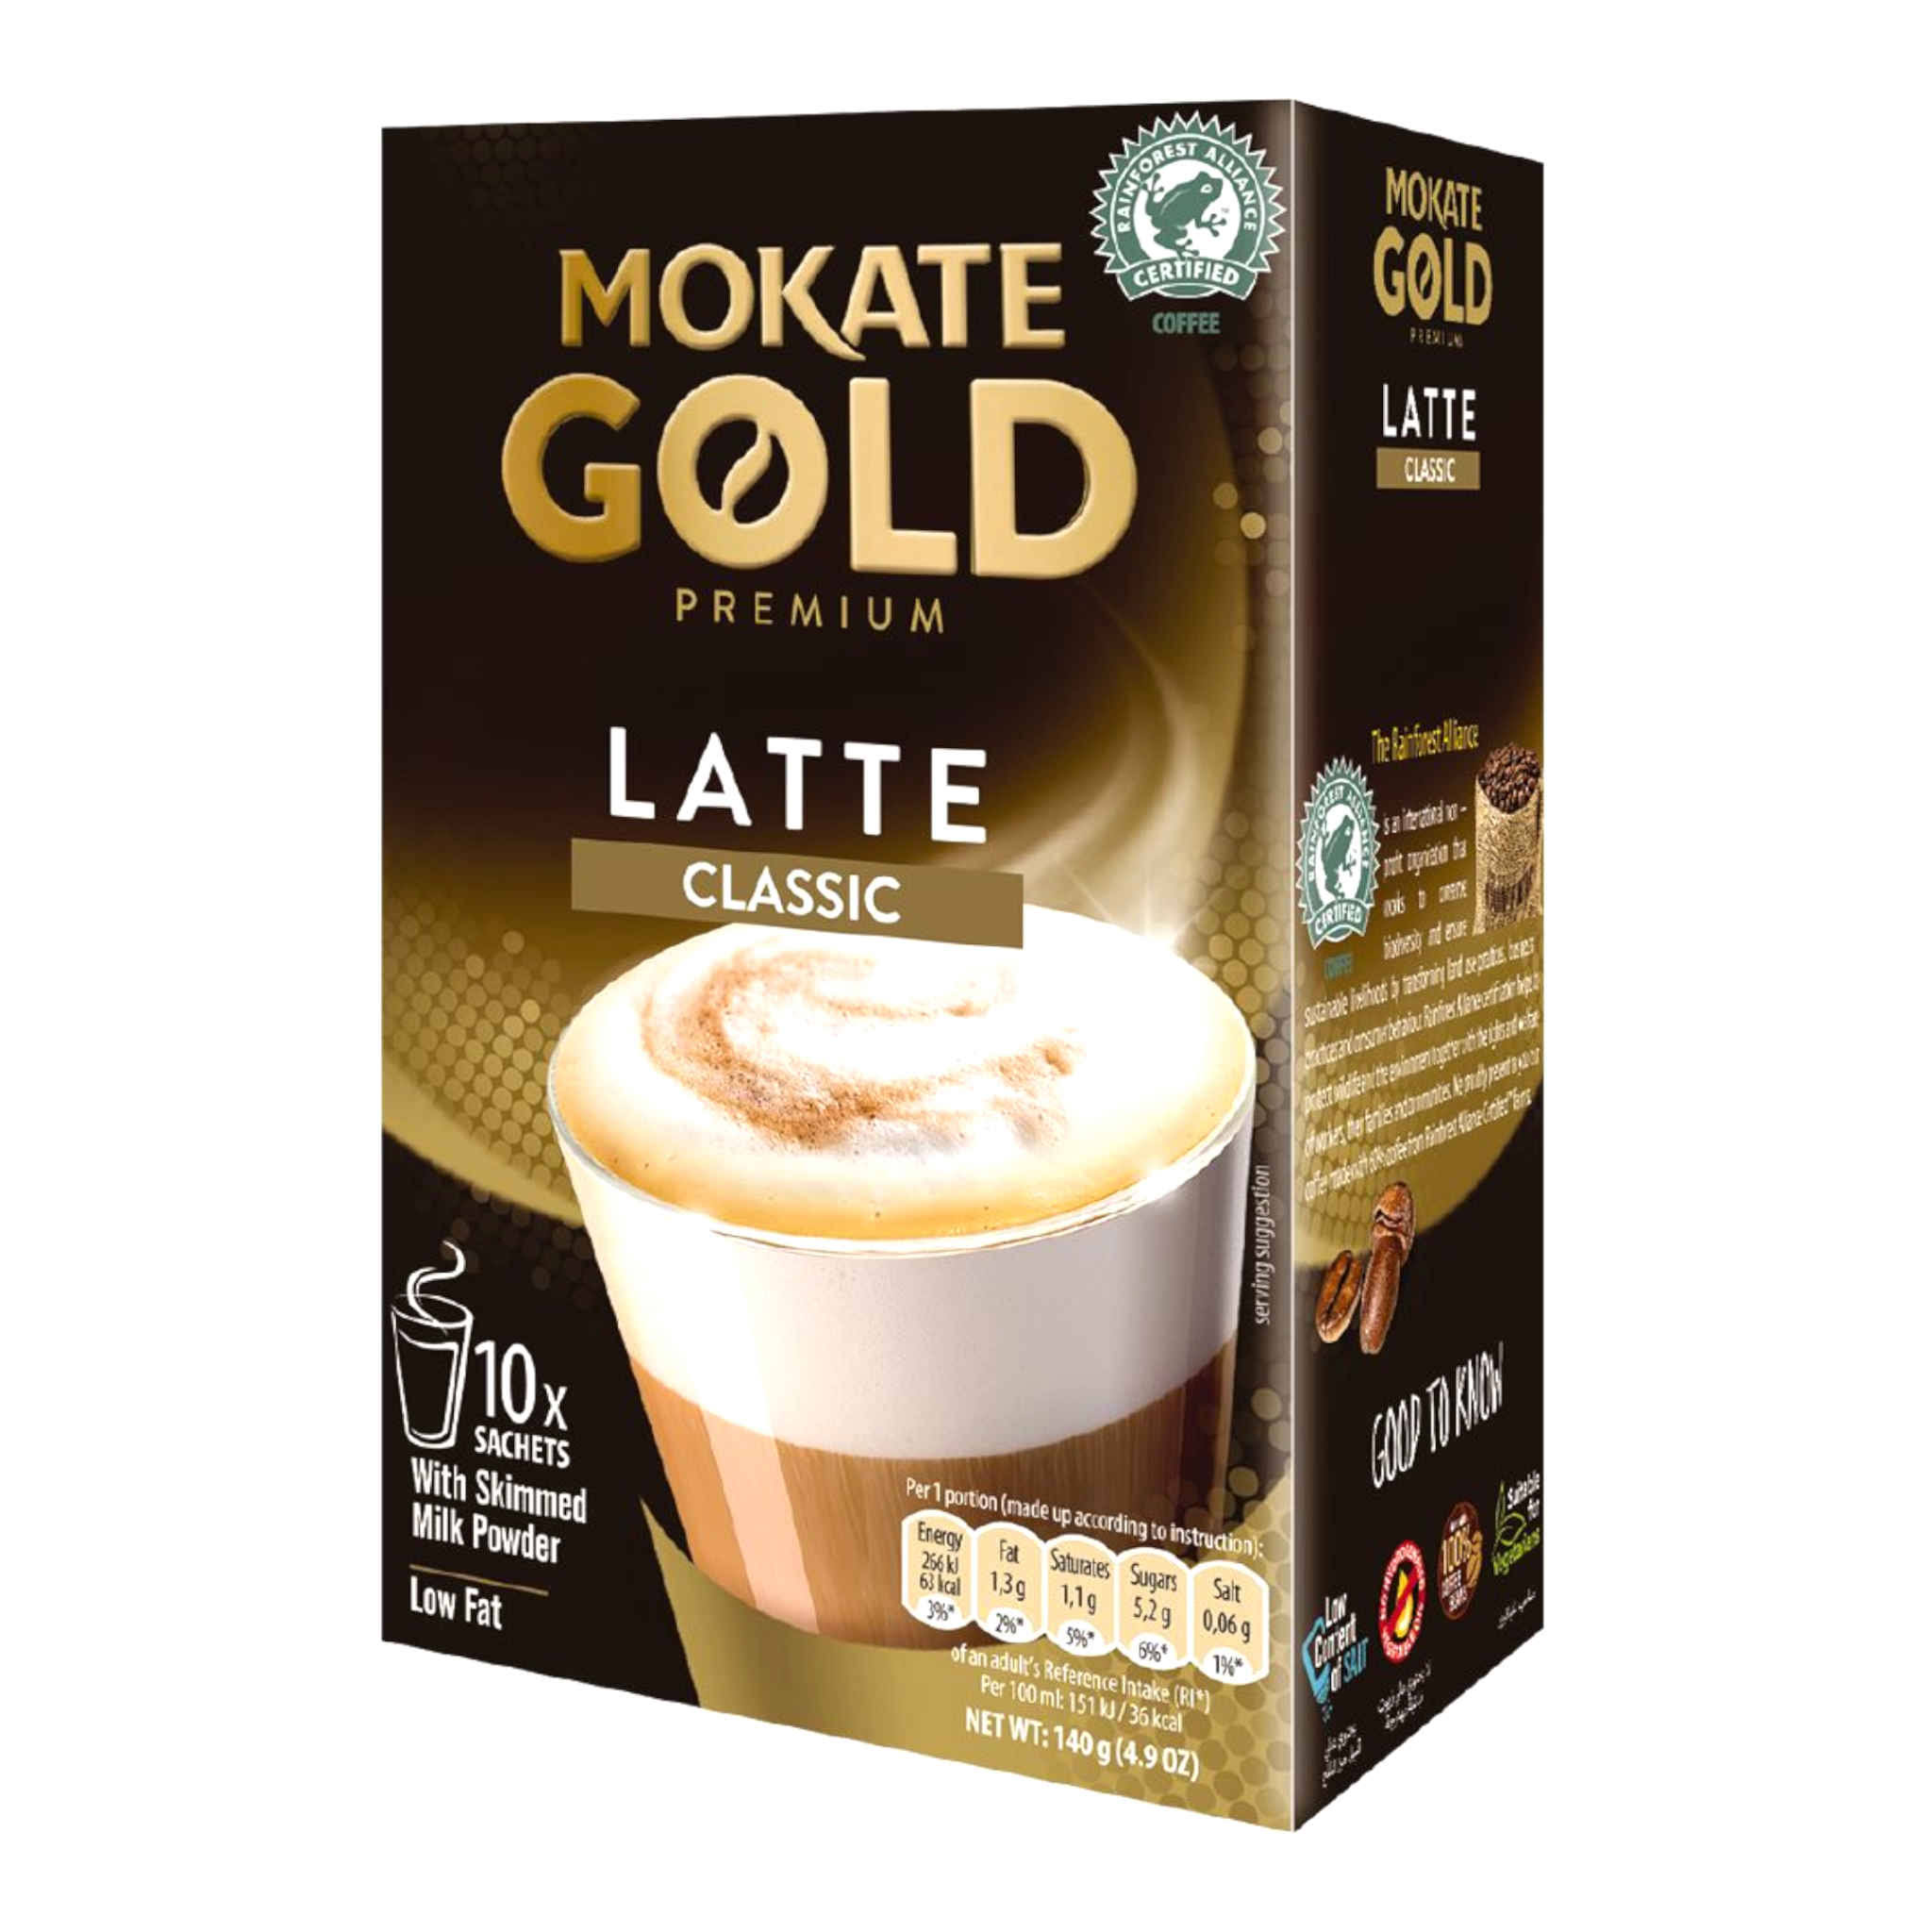 Mokate Gold - Premium Latte Classic - 10 x 14g